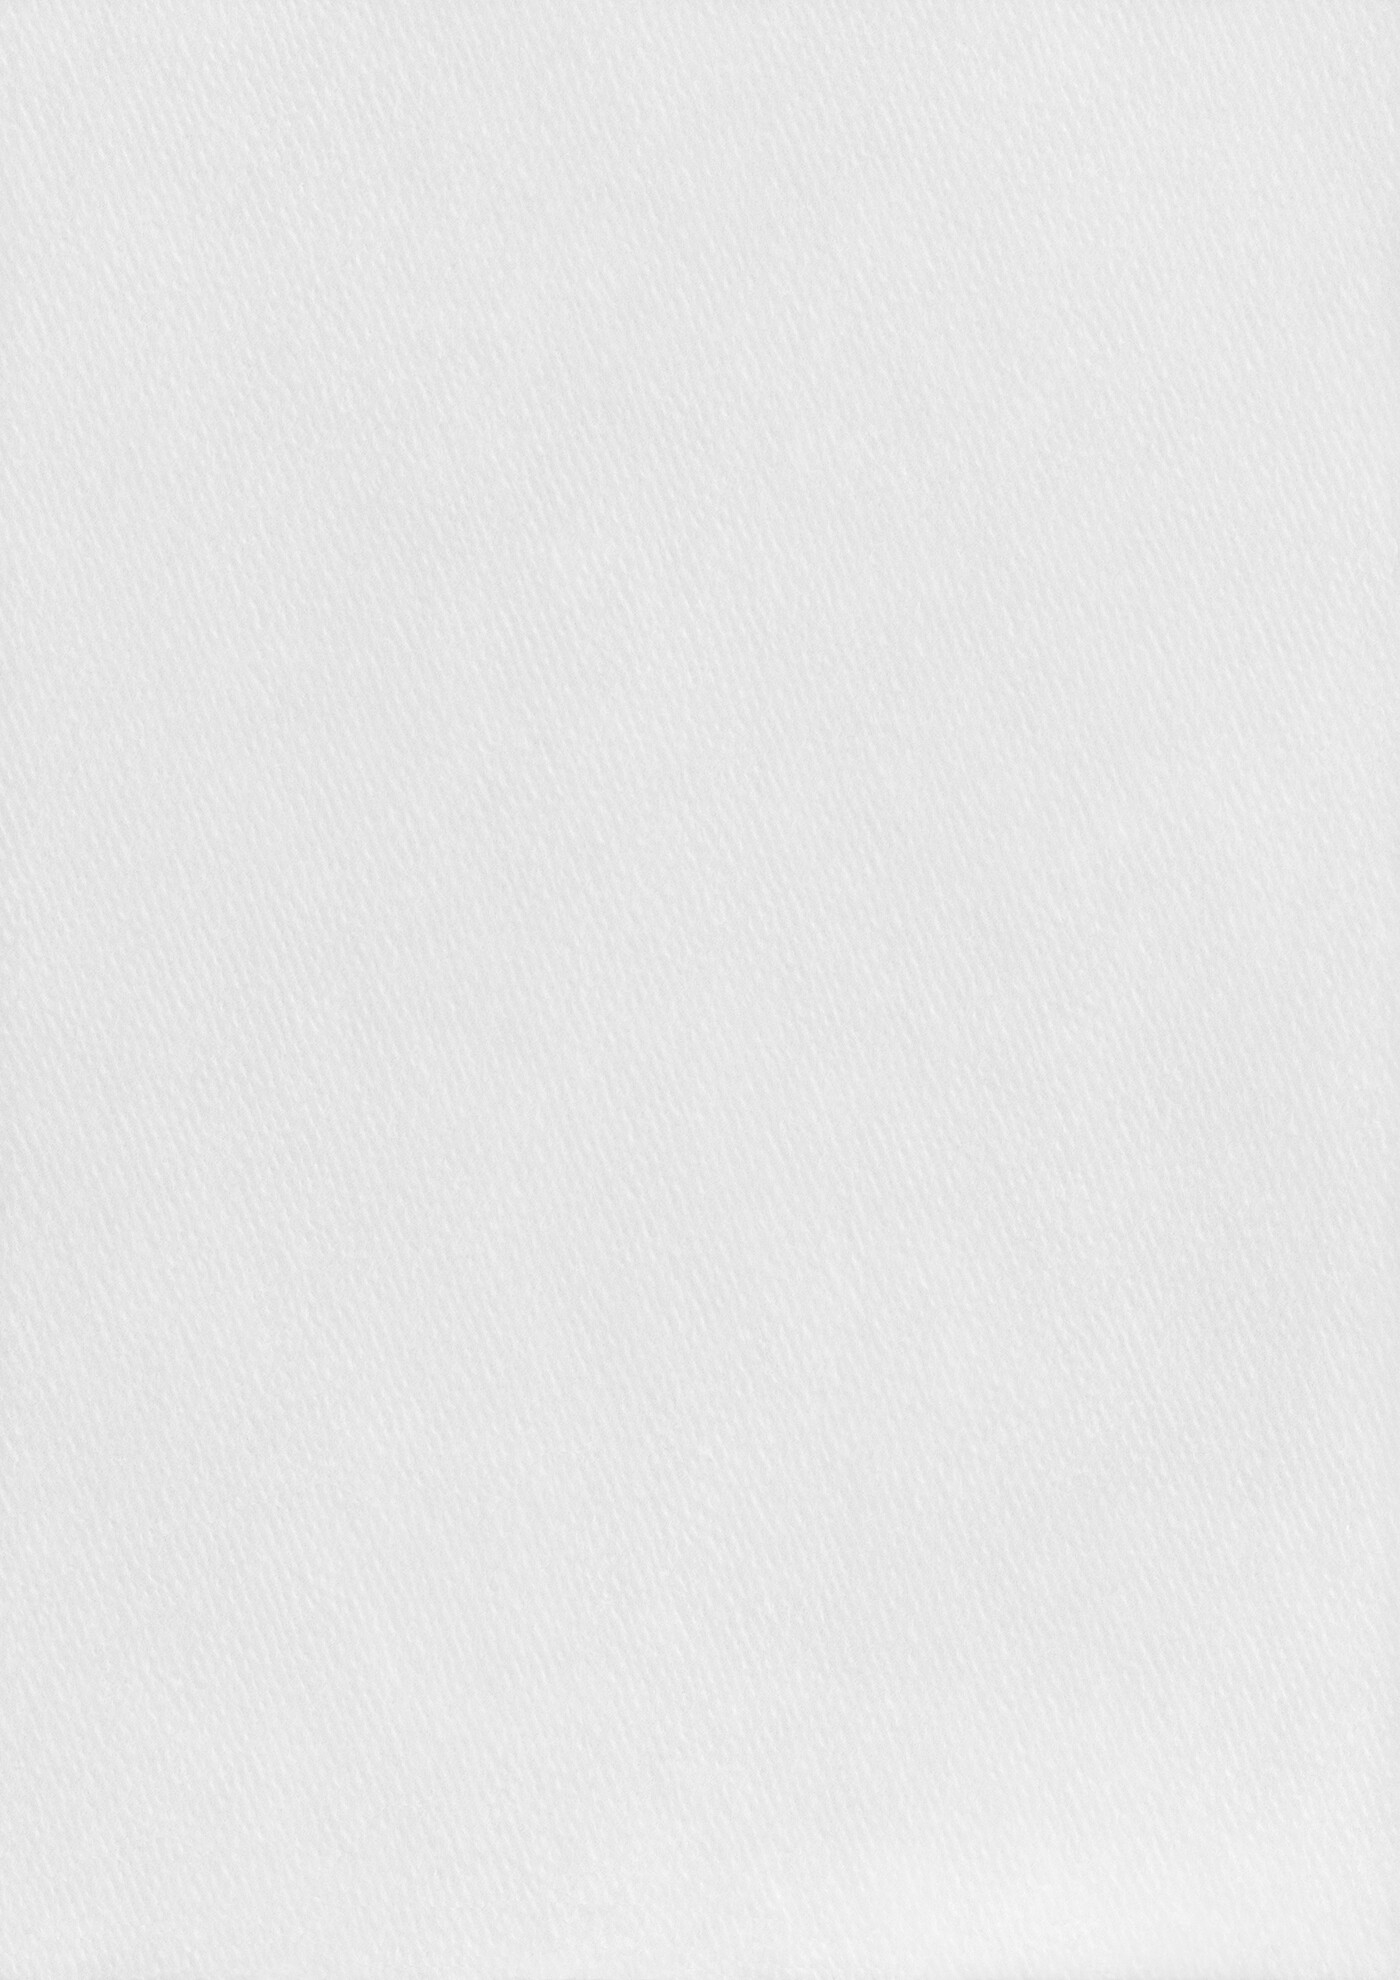 1400x1980 ArtStation 26 White Paper Background Textures